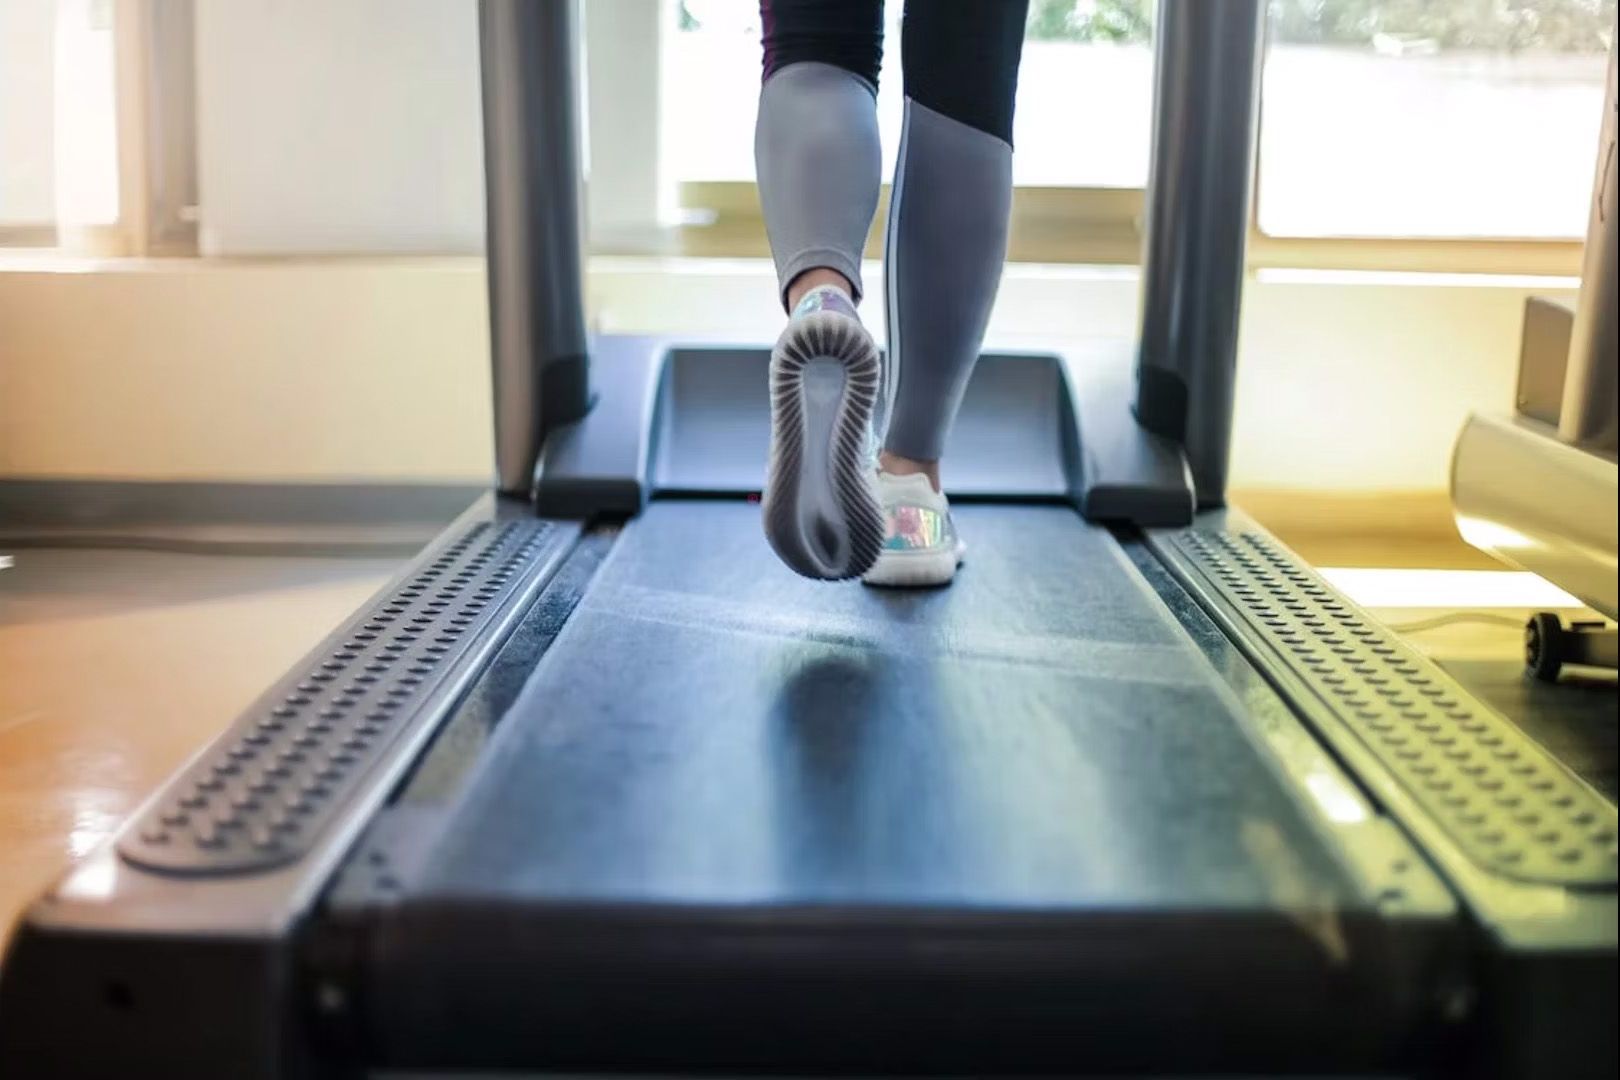 A photo of a woman's feet running on a treadmill